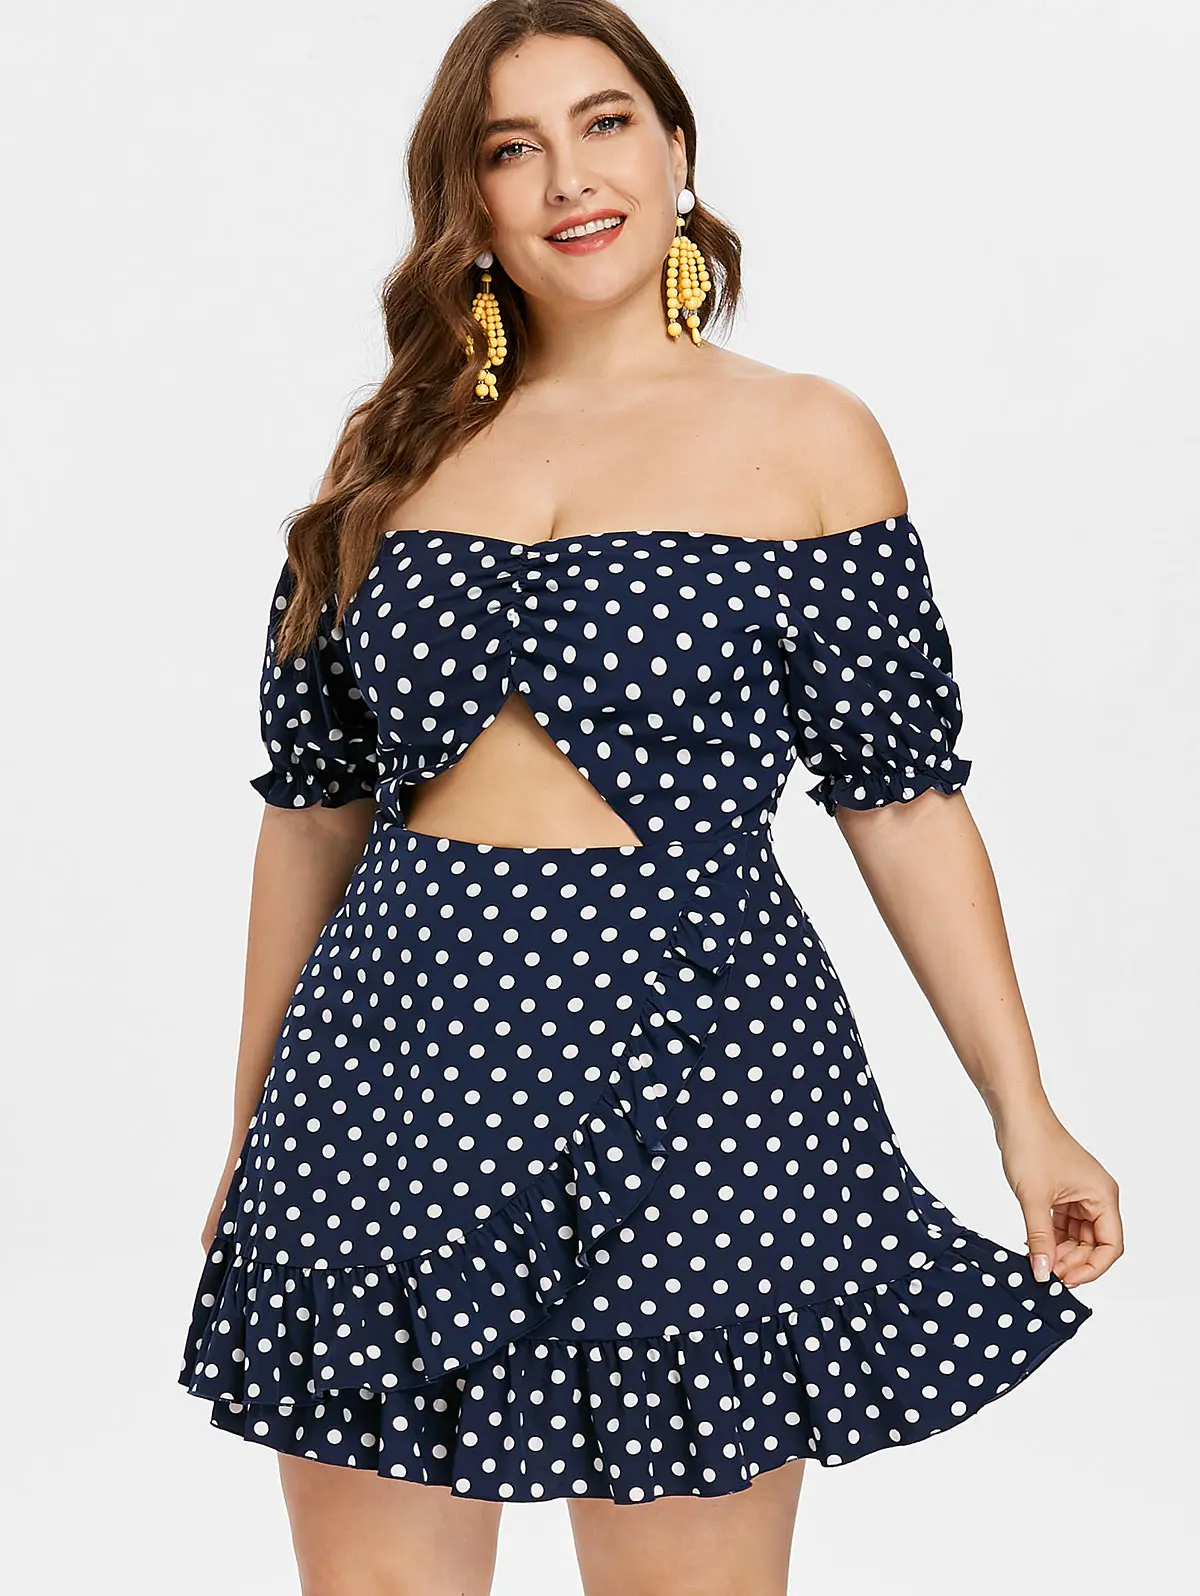 Gamiss Plus Size Polka Dot Women Summer Casual Sexy Ruffle Elegant Mini 